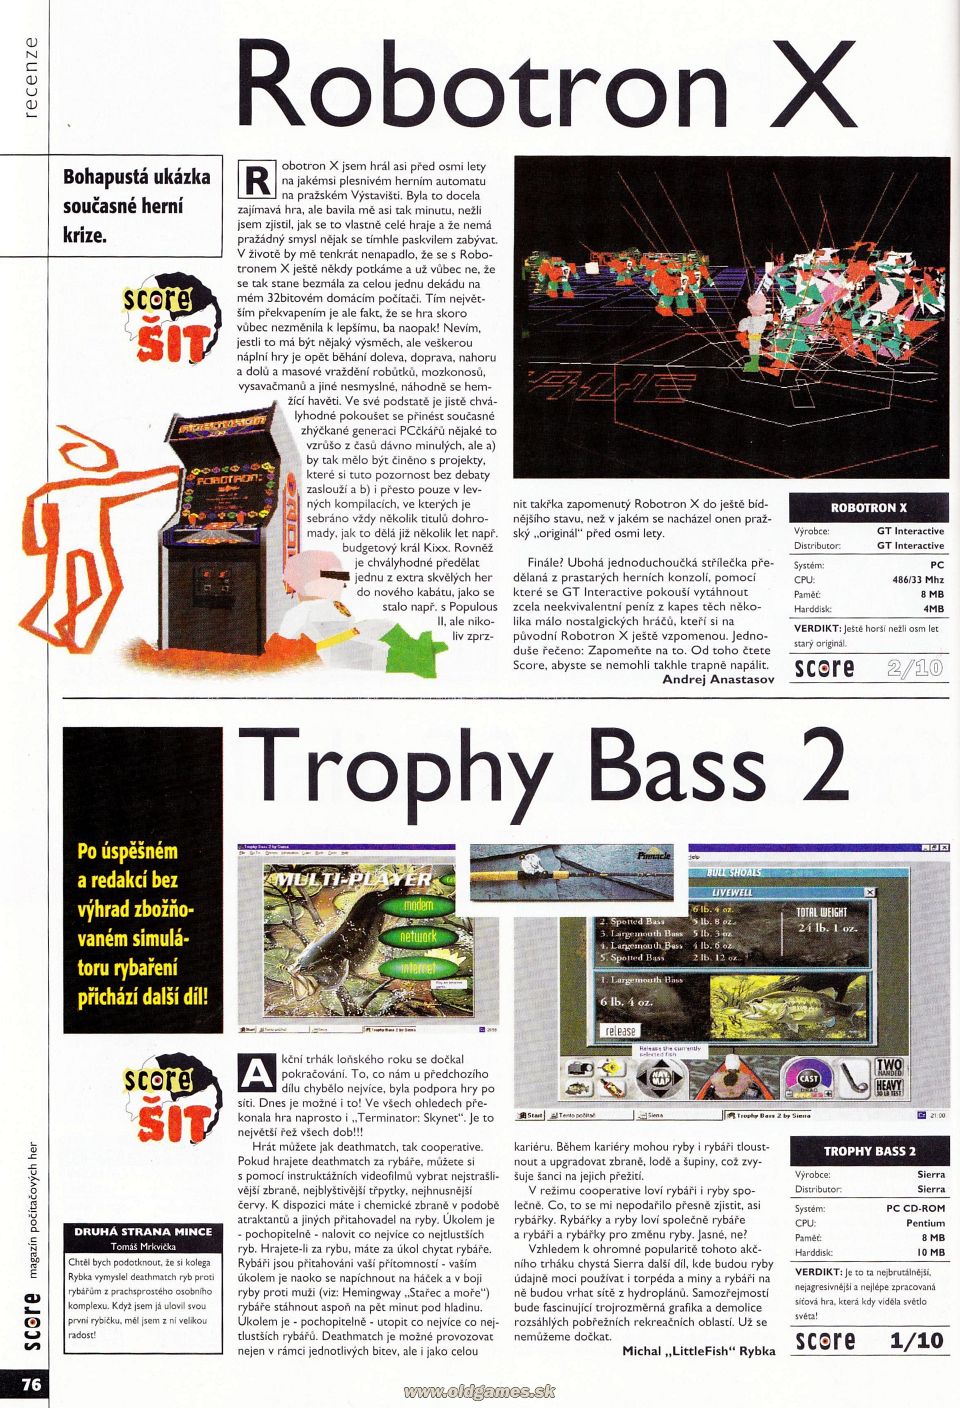 Robotron X, Trophy Bass 2